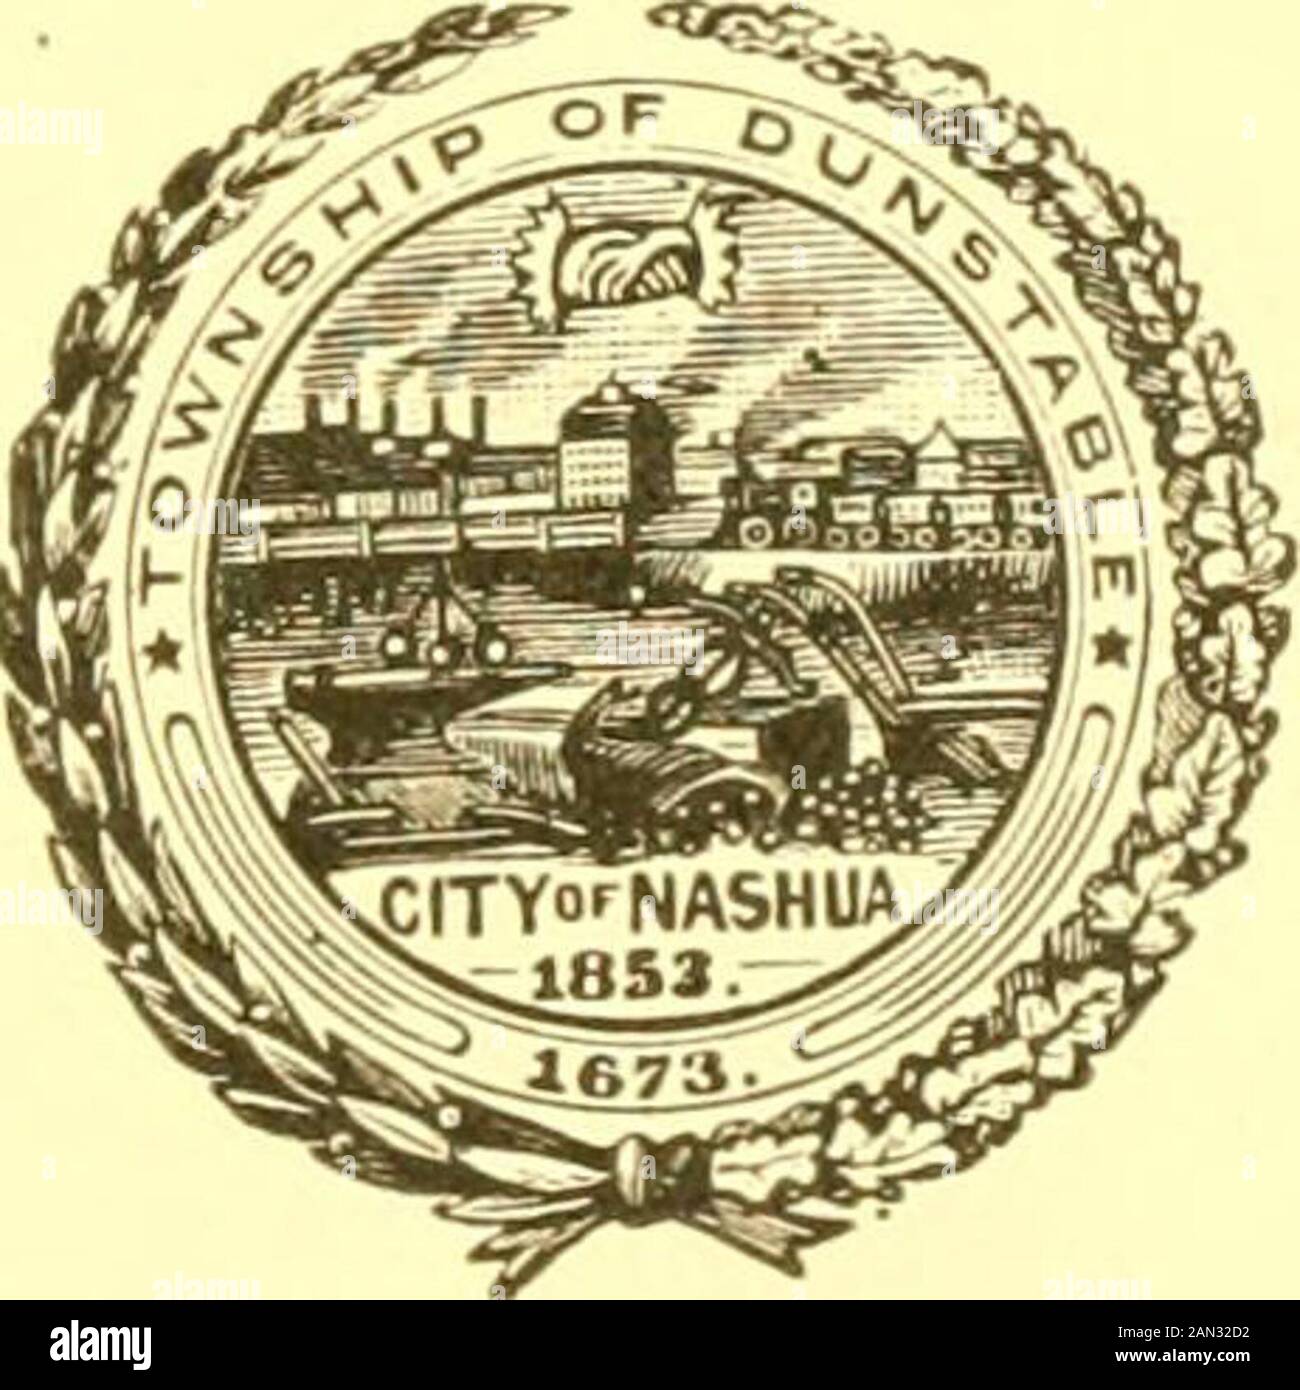 Report of the receipts and expenditures of the City of Nashua . -;miillllllirilllll H^rirultuv JiJ|!t)crhn0loaoj m?m:. NASHUA, N. H.: Emilk E. Marouis, Prixthk-Bookiundhk. 1909. 35?. 07 40(V55) City (iovernment of the City of Nashua. For Ue Years 1907-8.Board of Mayor and Aldermen. mayor and chairman of the board. Hon. albert SHEDD. Office, City Hall Building;. Residence, 267 Main Street. William H. Lovejoy,E. Ray Shaw,Joseph Paul, Jr.,Everett R. George,Eugene J. Stanton,Evdward H. Wason,Thomas F. Moran, Aldermen. WARD ONE. WARD TWO. WARD THREE. WARD FOUR. W.RD FIVE, WARD SIX. WARD SEVEN. 9 Stock Photo